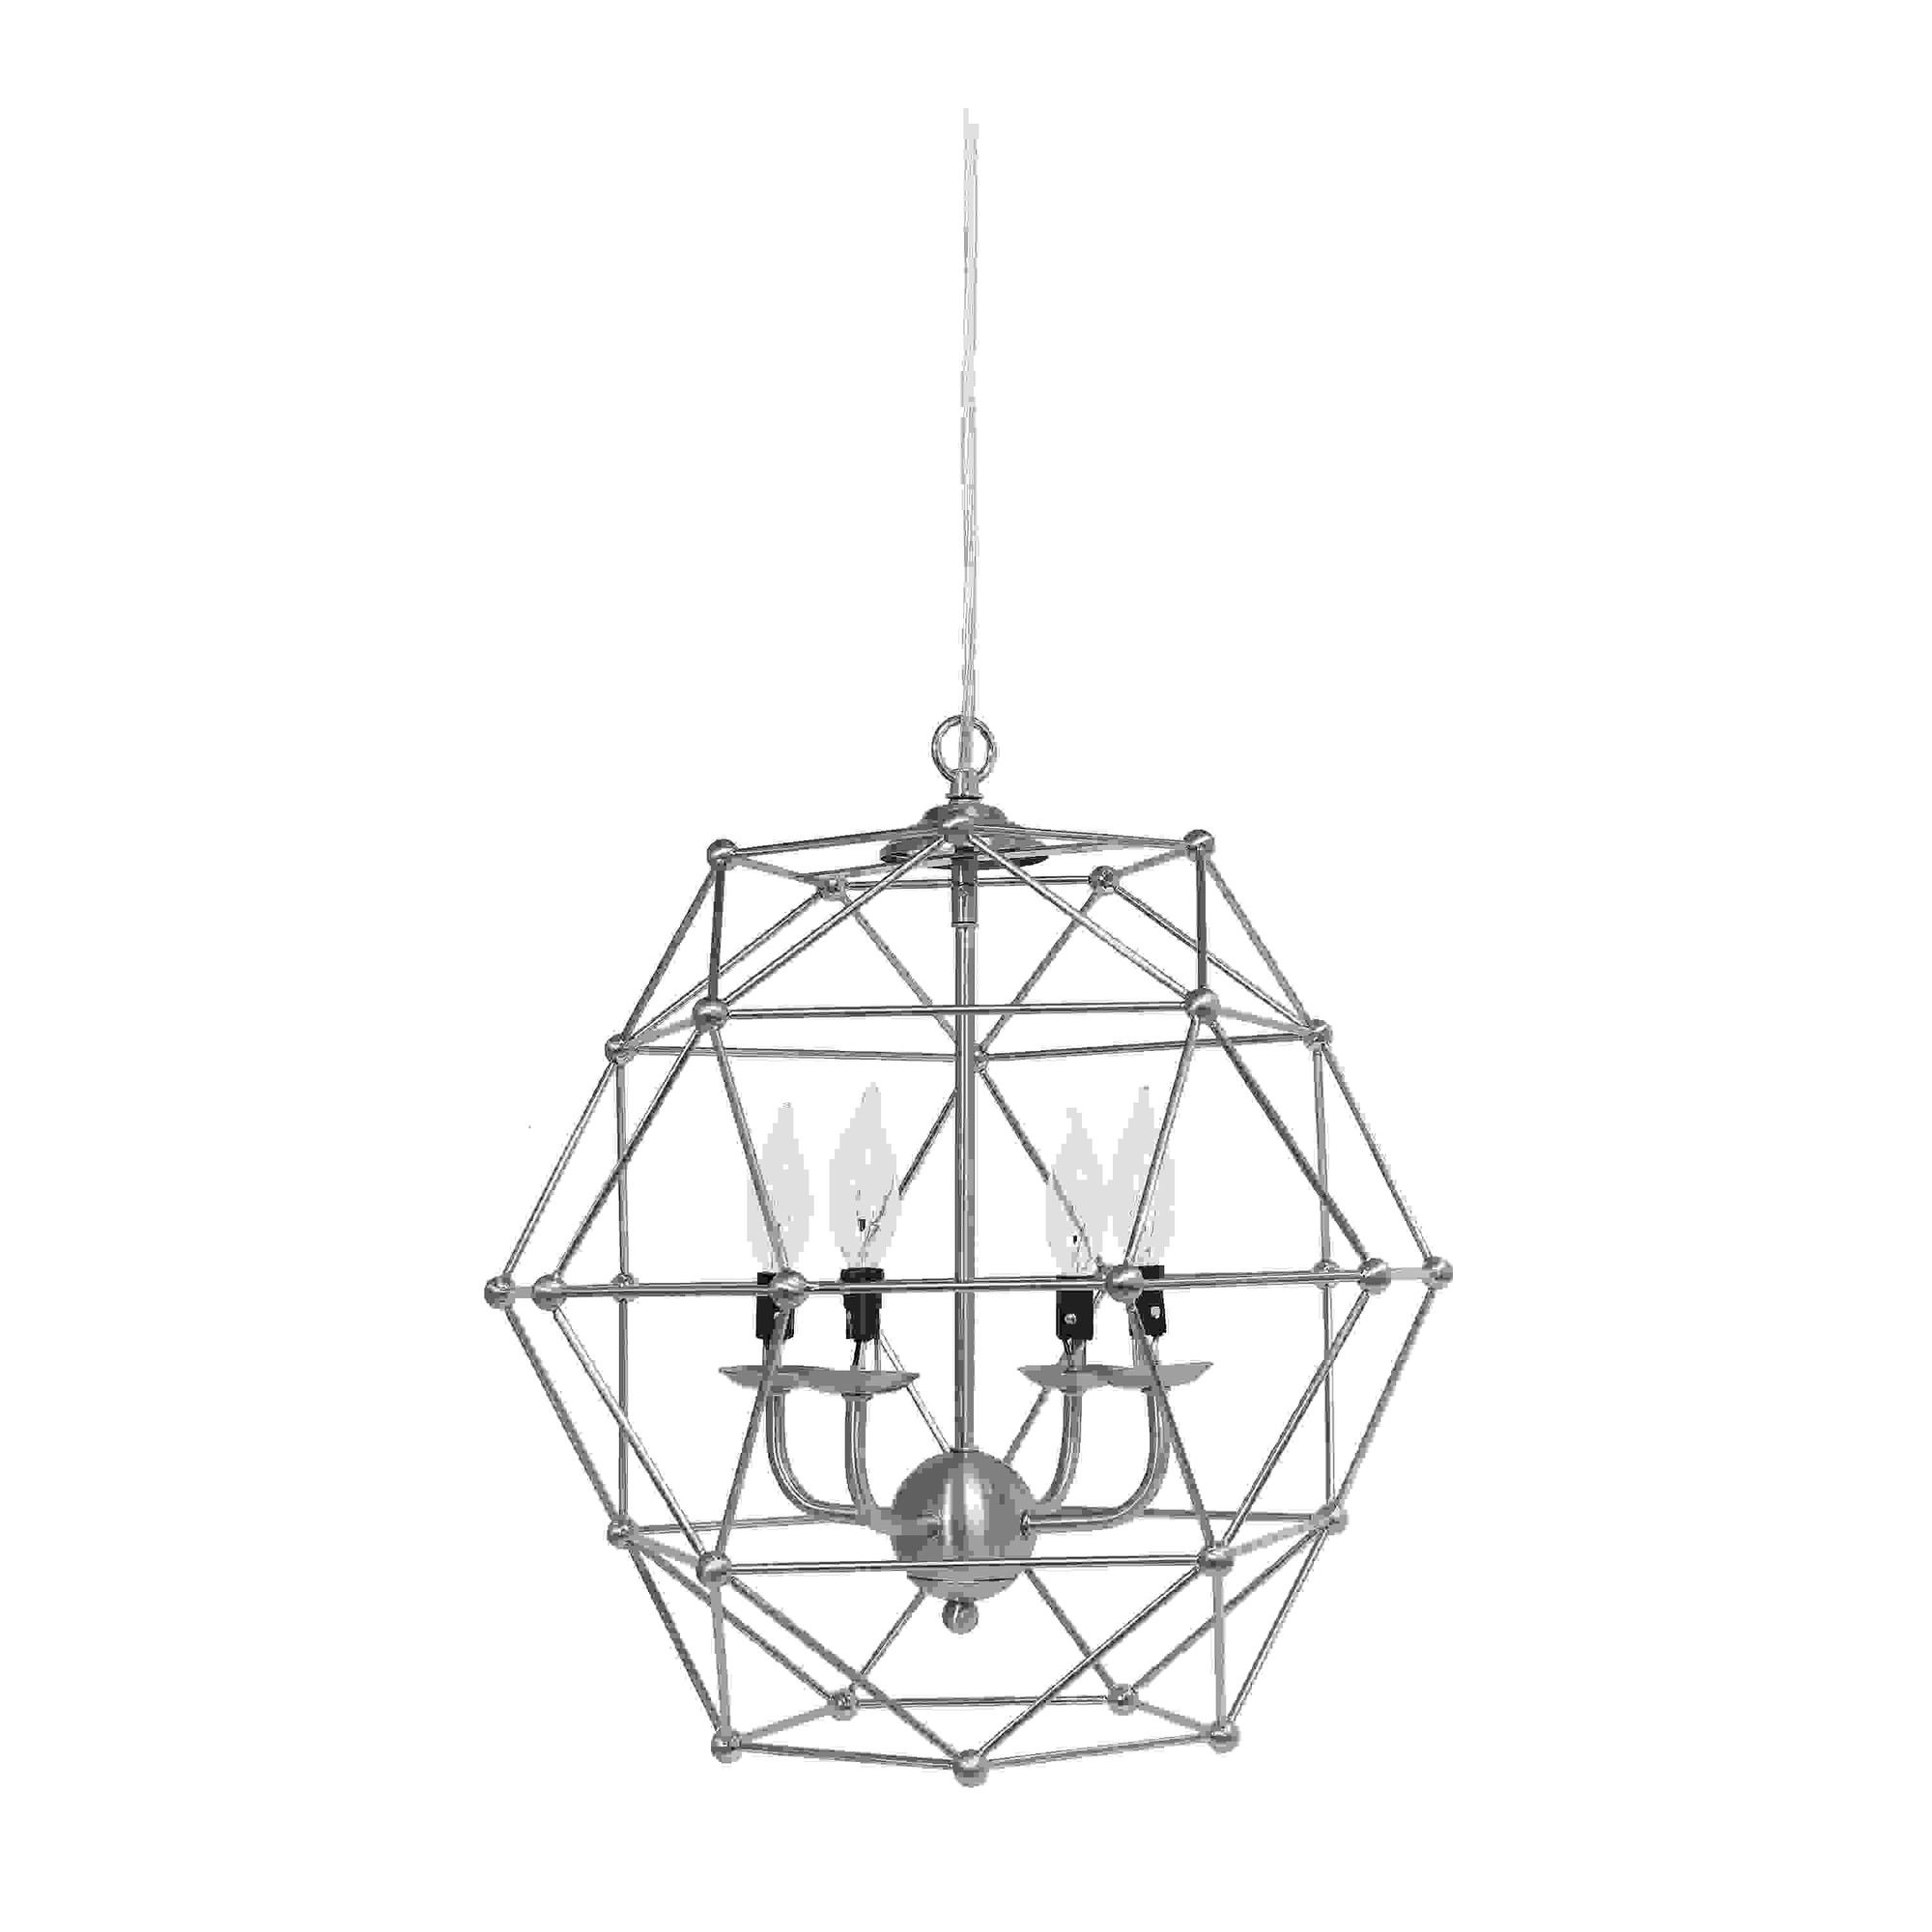 Elegant Designs 4 Light Hexagon Industrial Rustic Pendant Light, Brushed Nickel